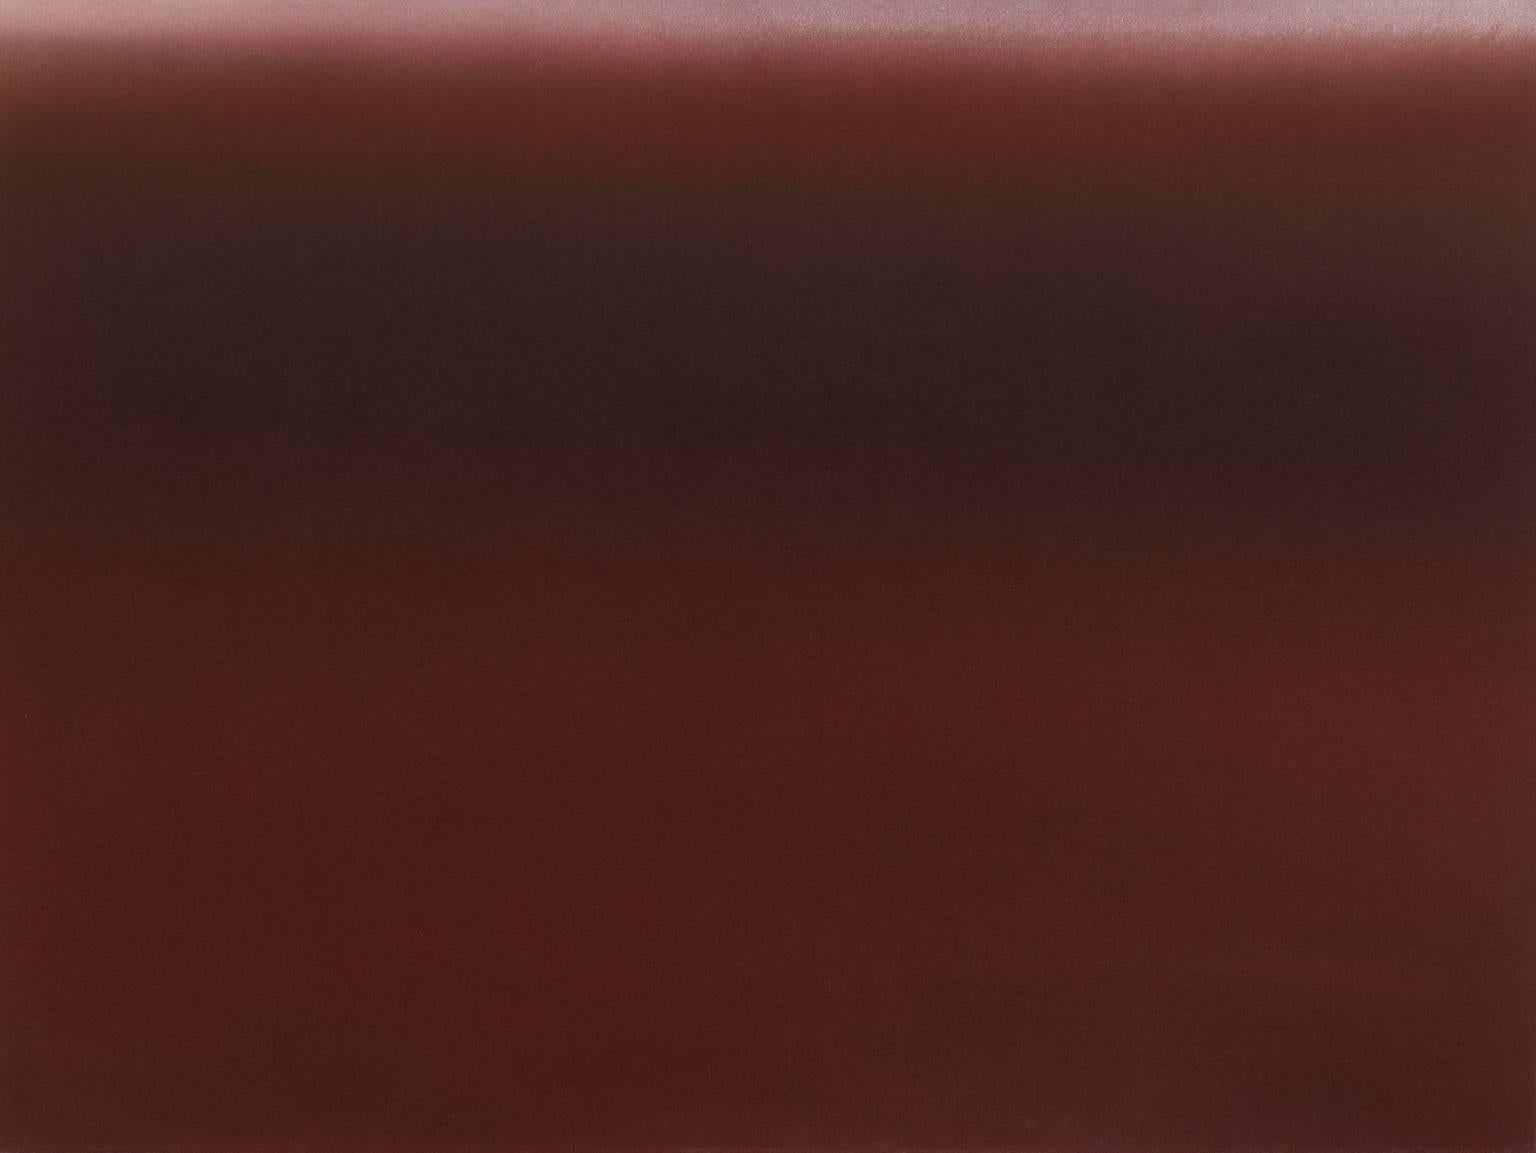 Mala Breuer Abstract Painting - 1975 (maroon, deep plum, lavender grey)